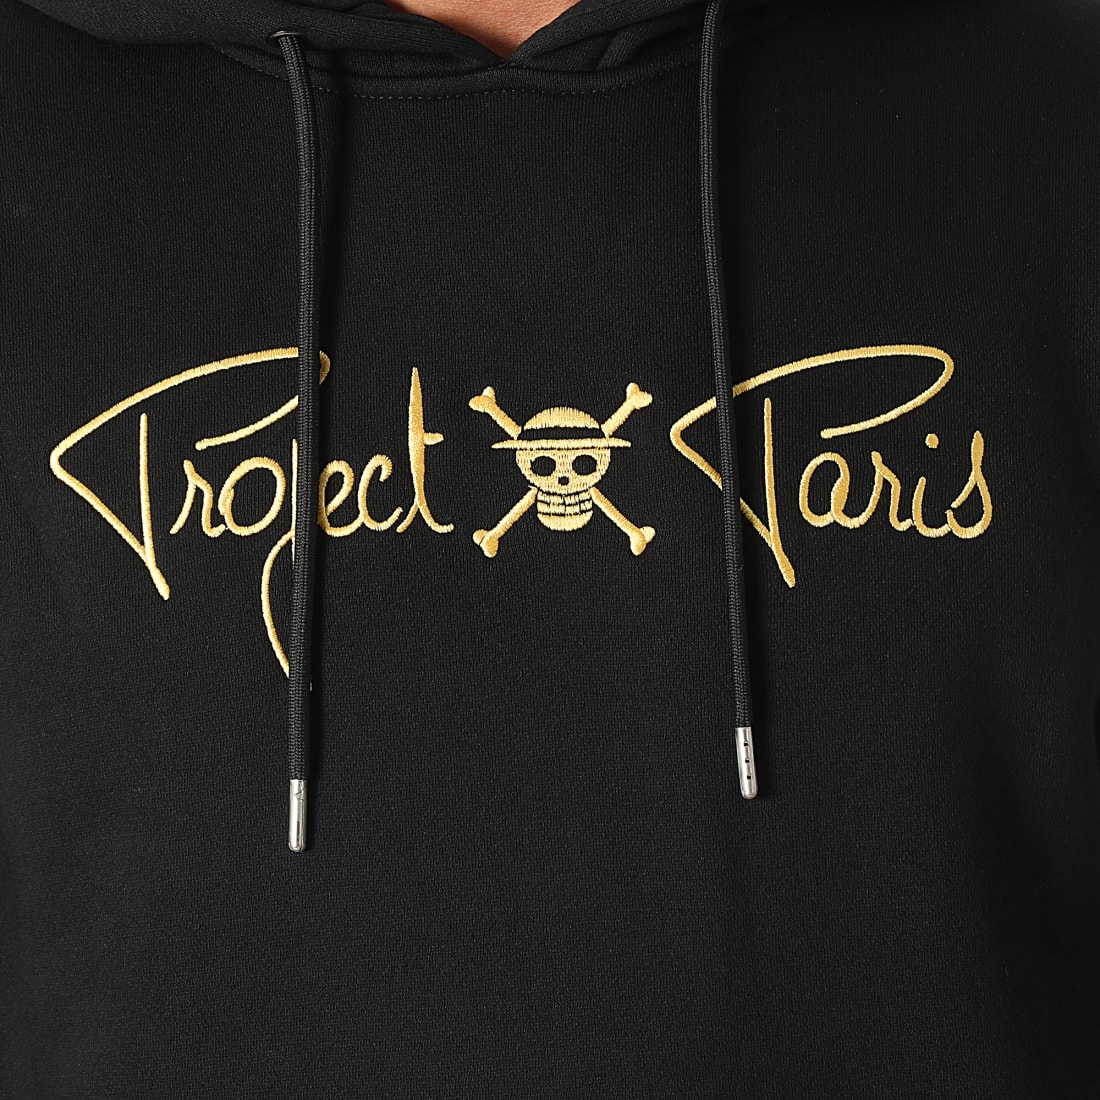 One piece X Project X Paris clothing